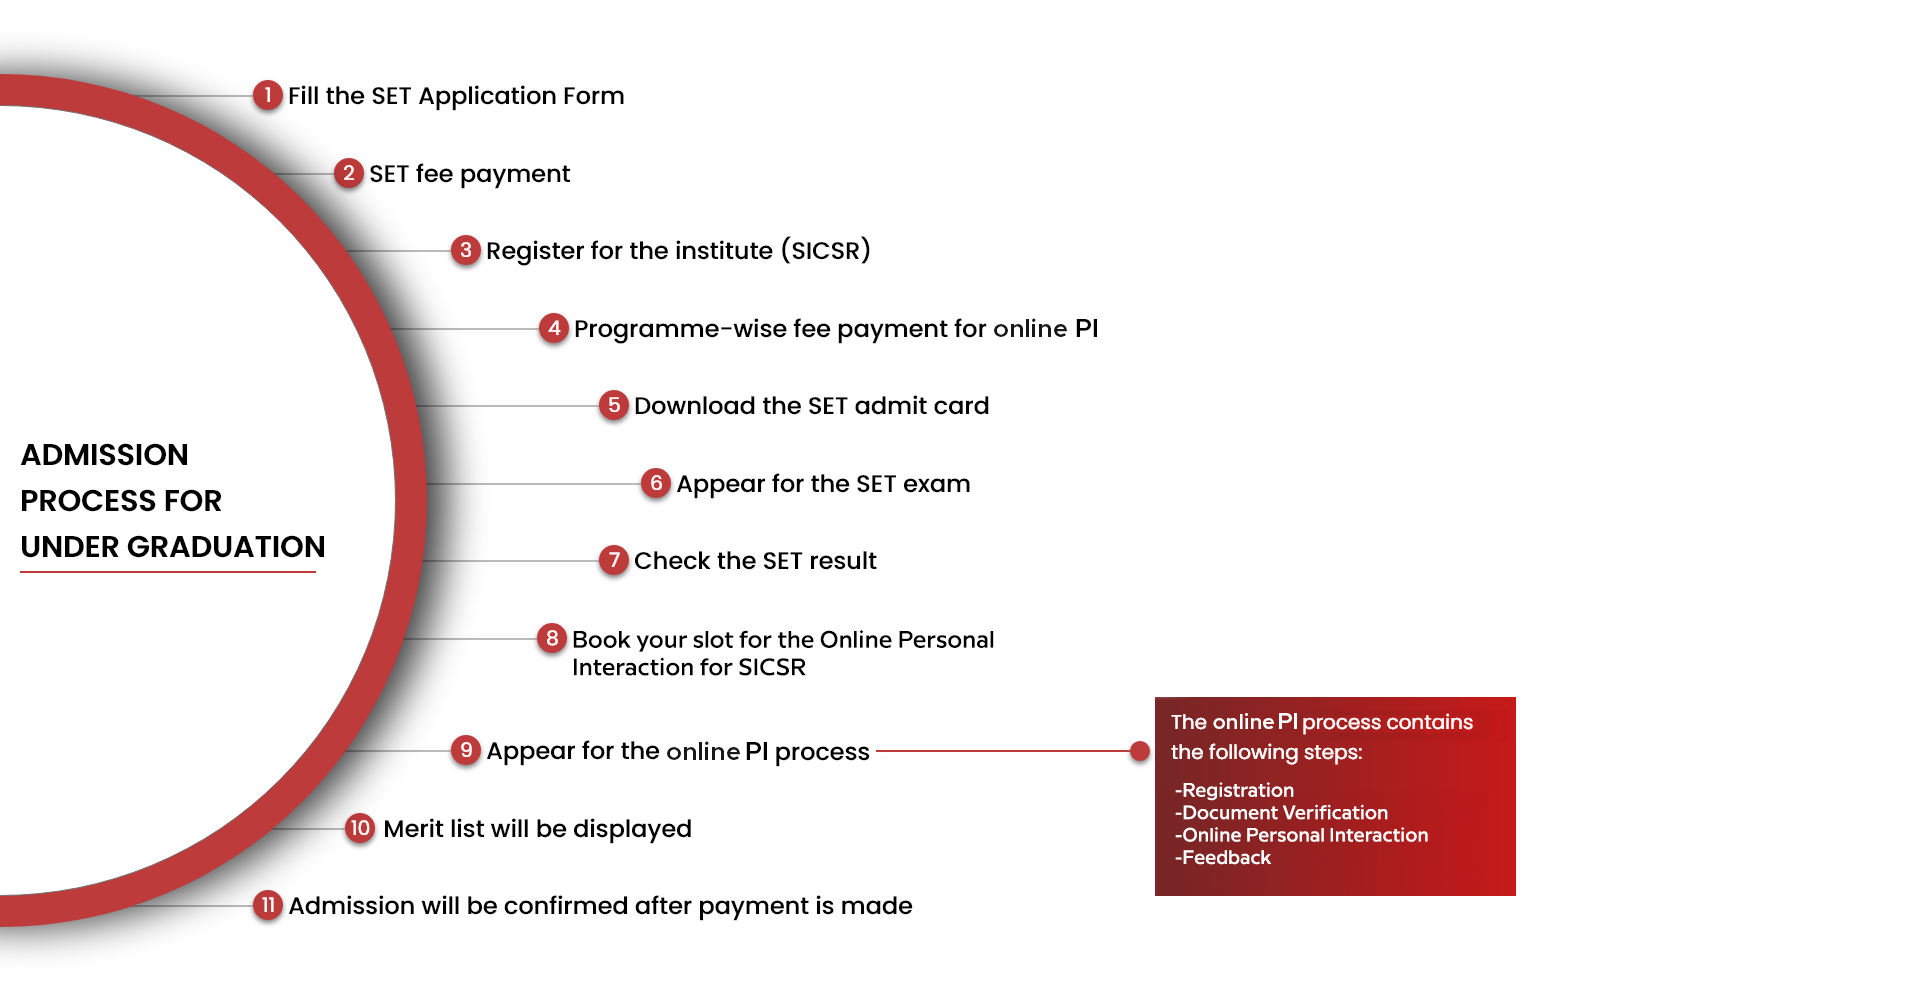 Admission Process for Under Graduation